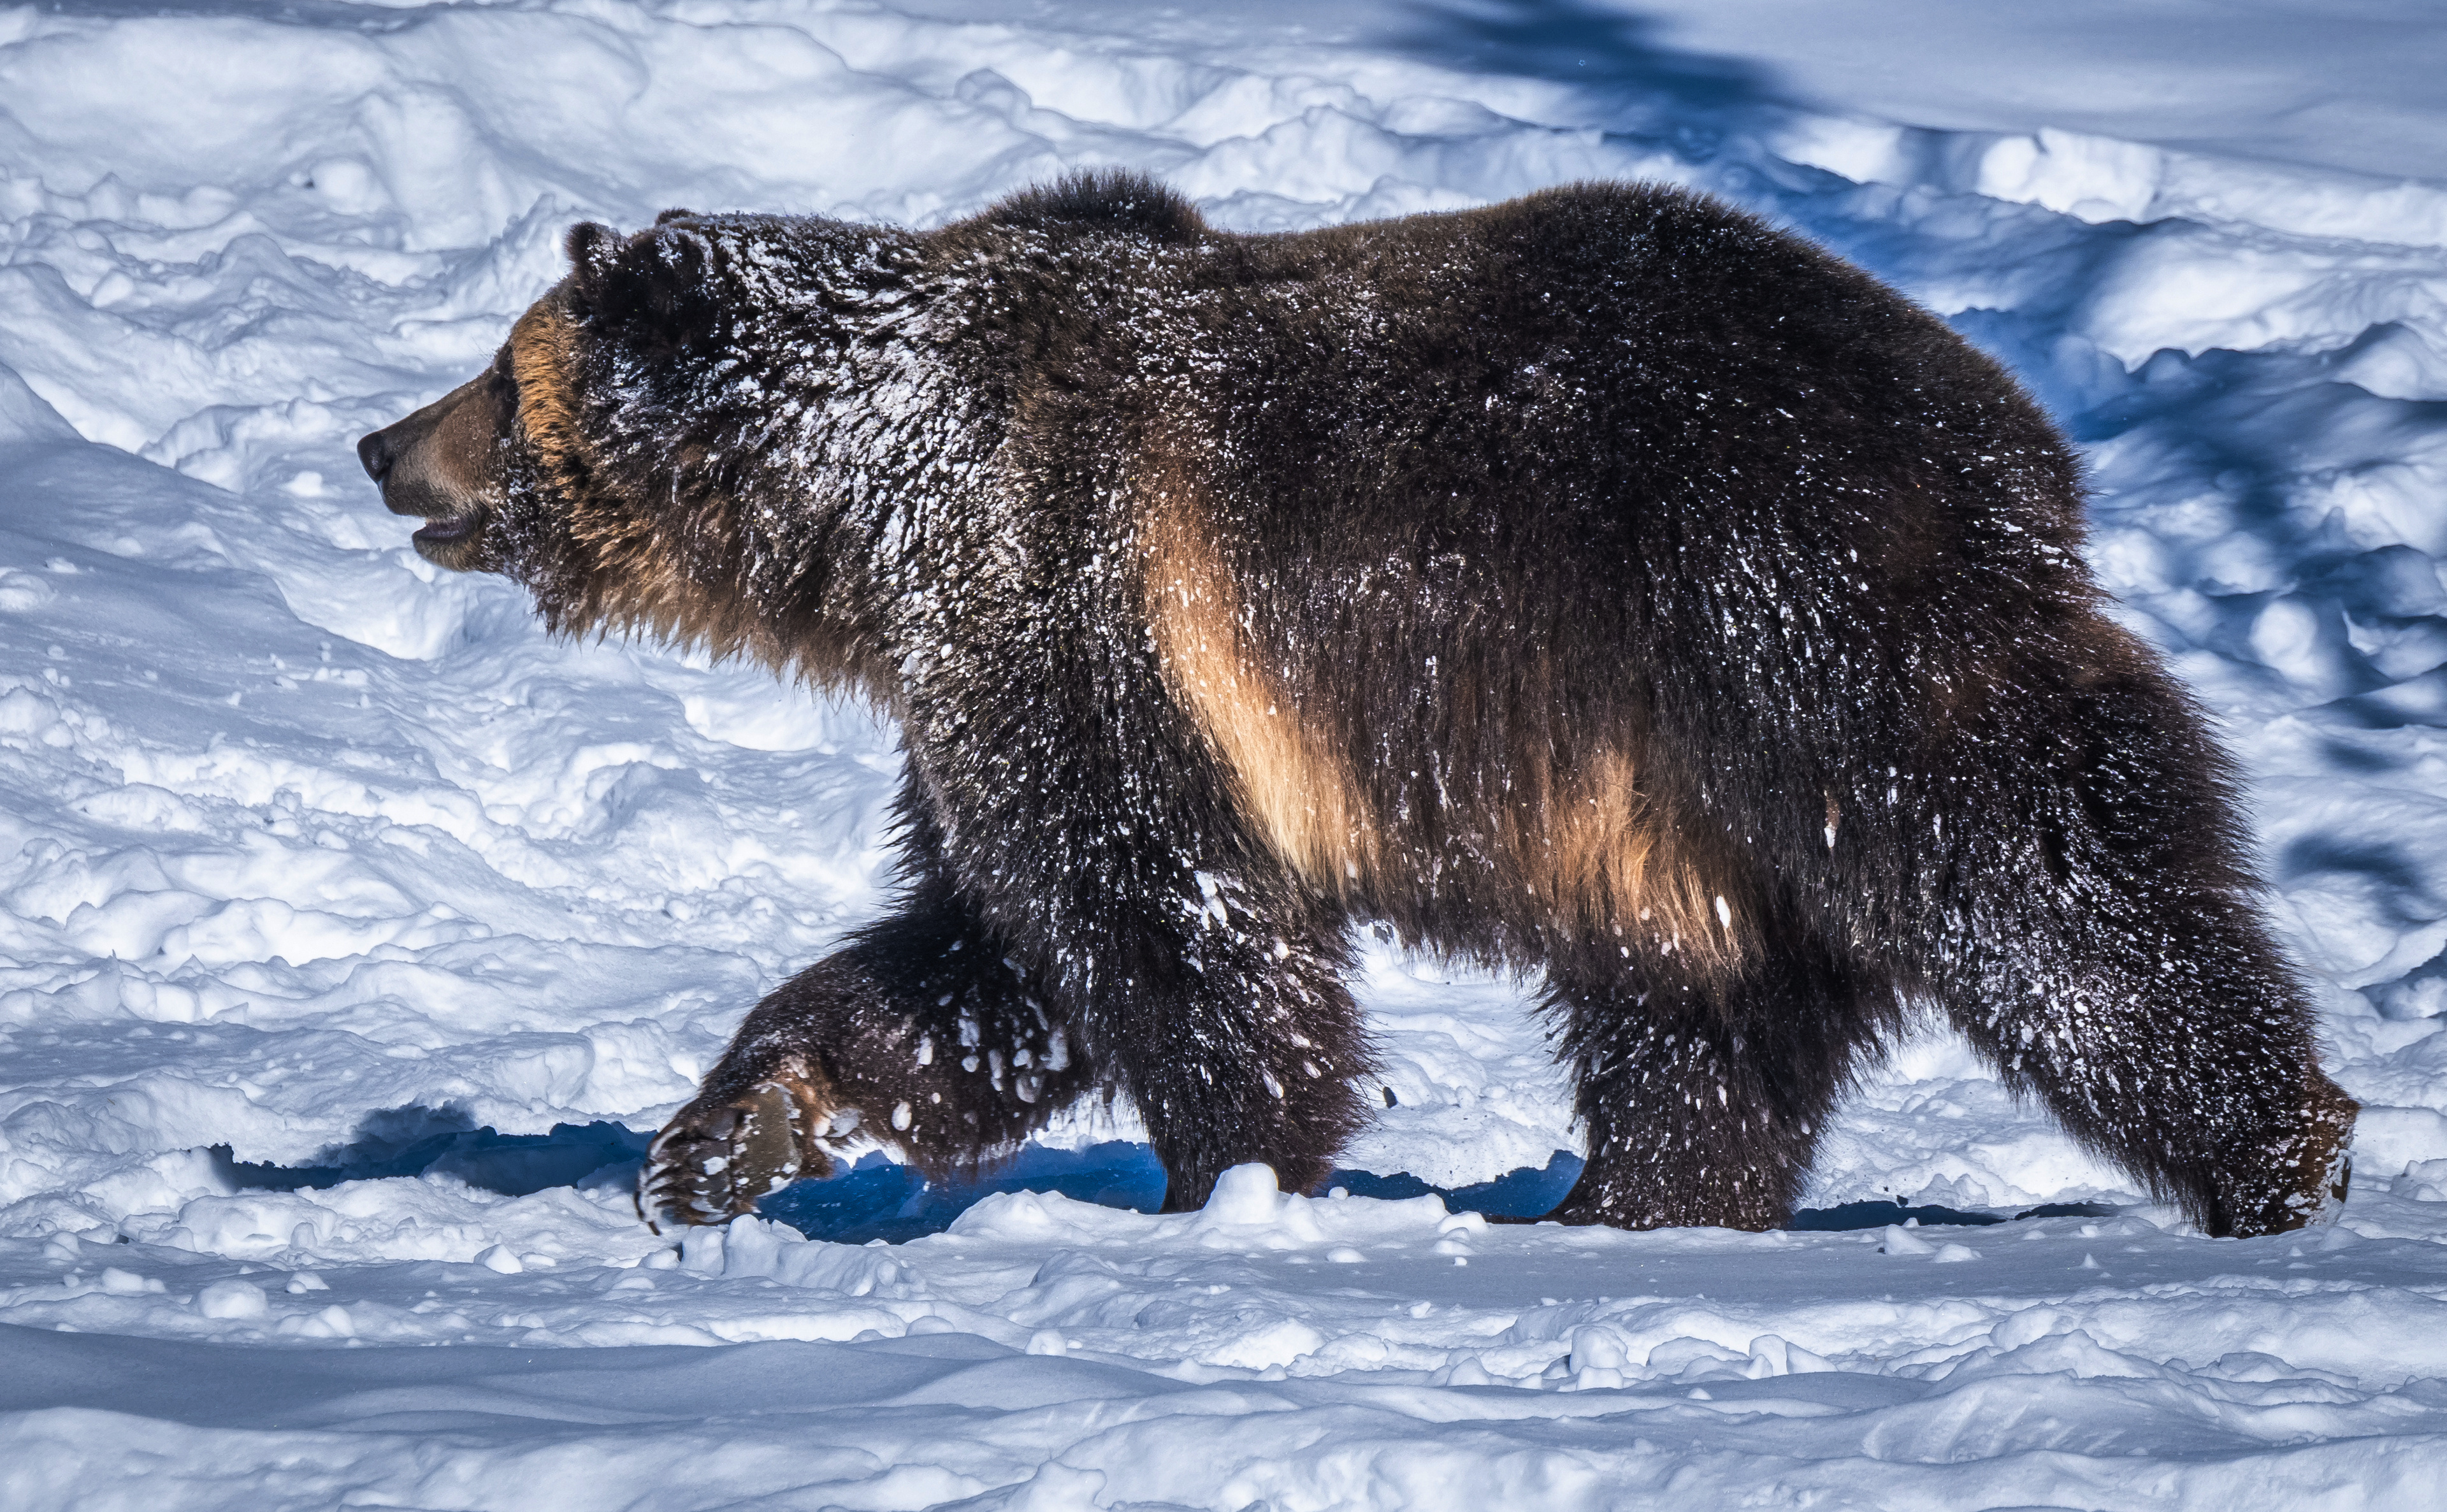 497865 descargar imagen animales, grizzly, oso pardo, nieve, osos: fondos de pantalla y protectores de pantalla gratis